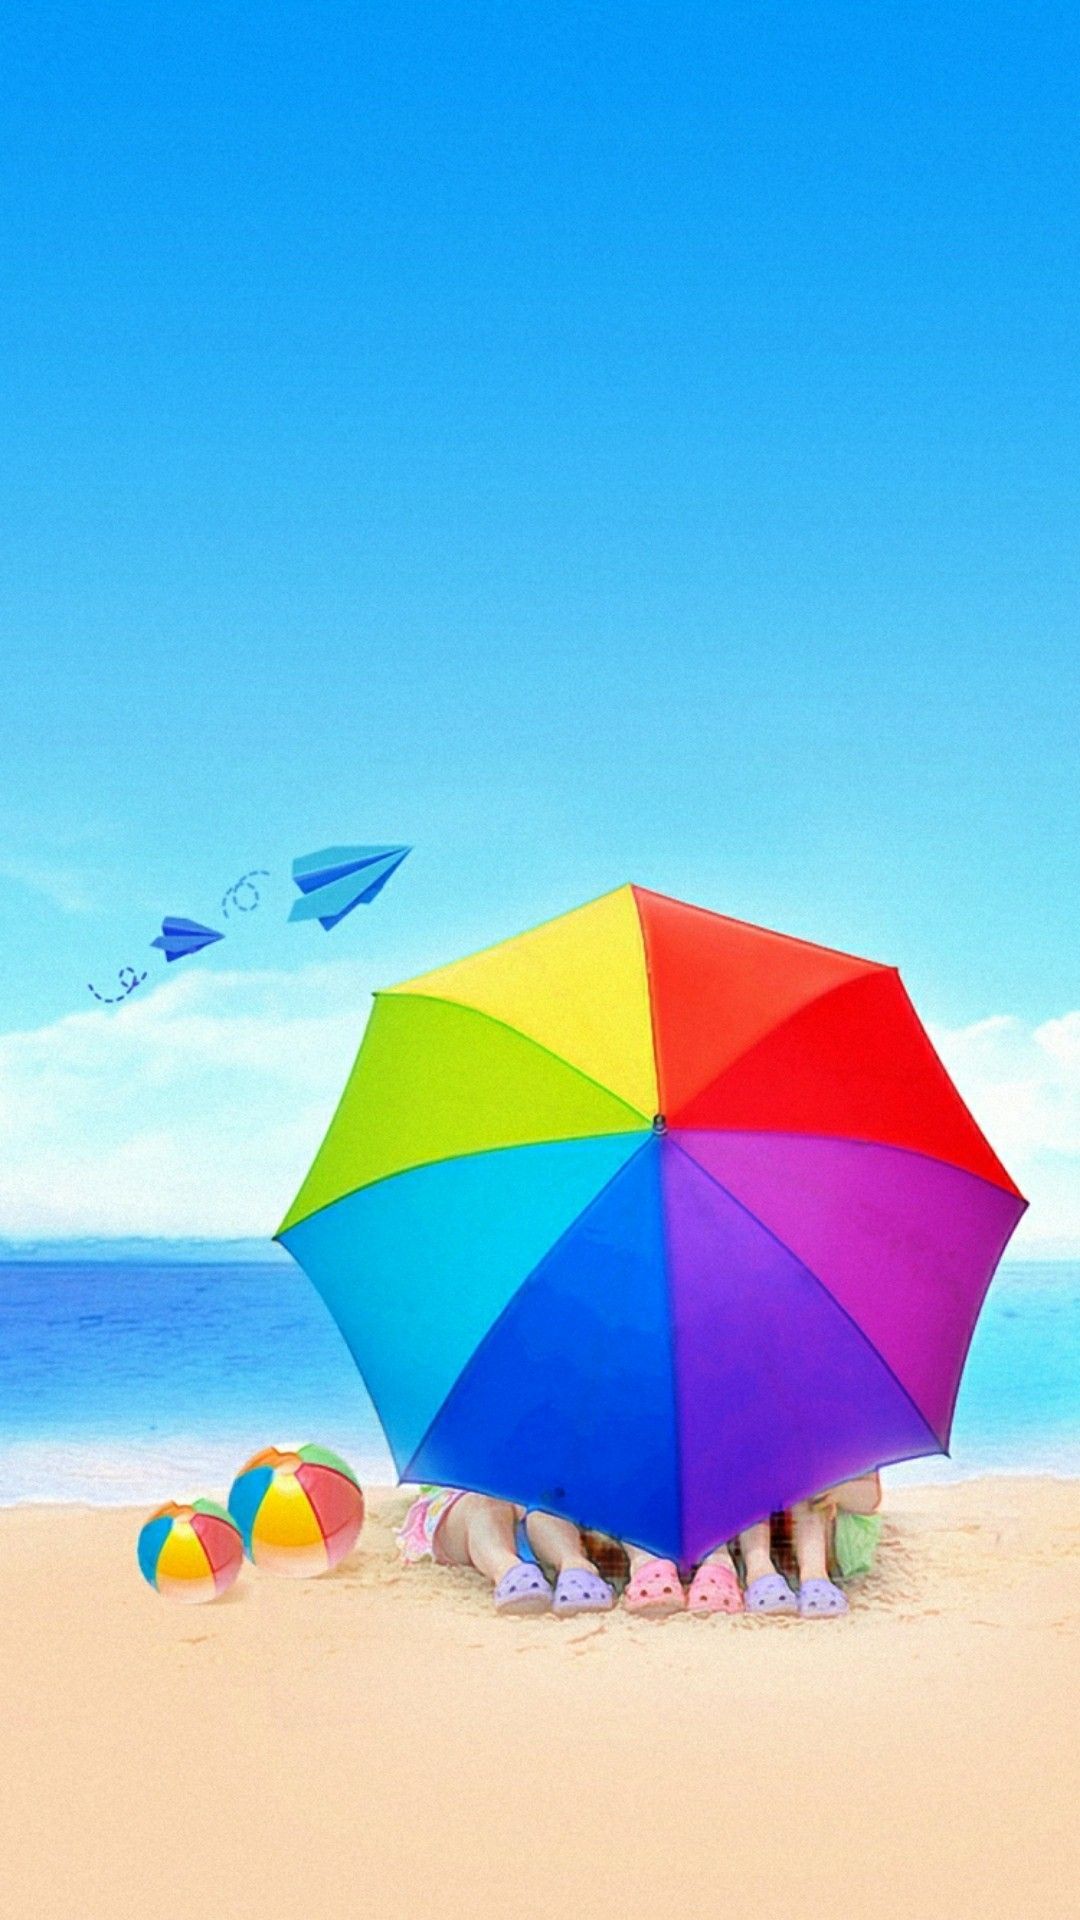 Beach umbrella. Best wallpaper android, iPhone 5s wallpaper